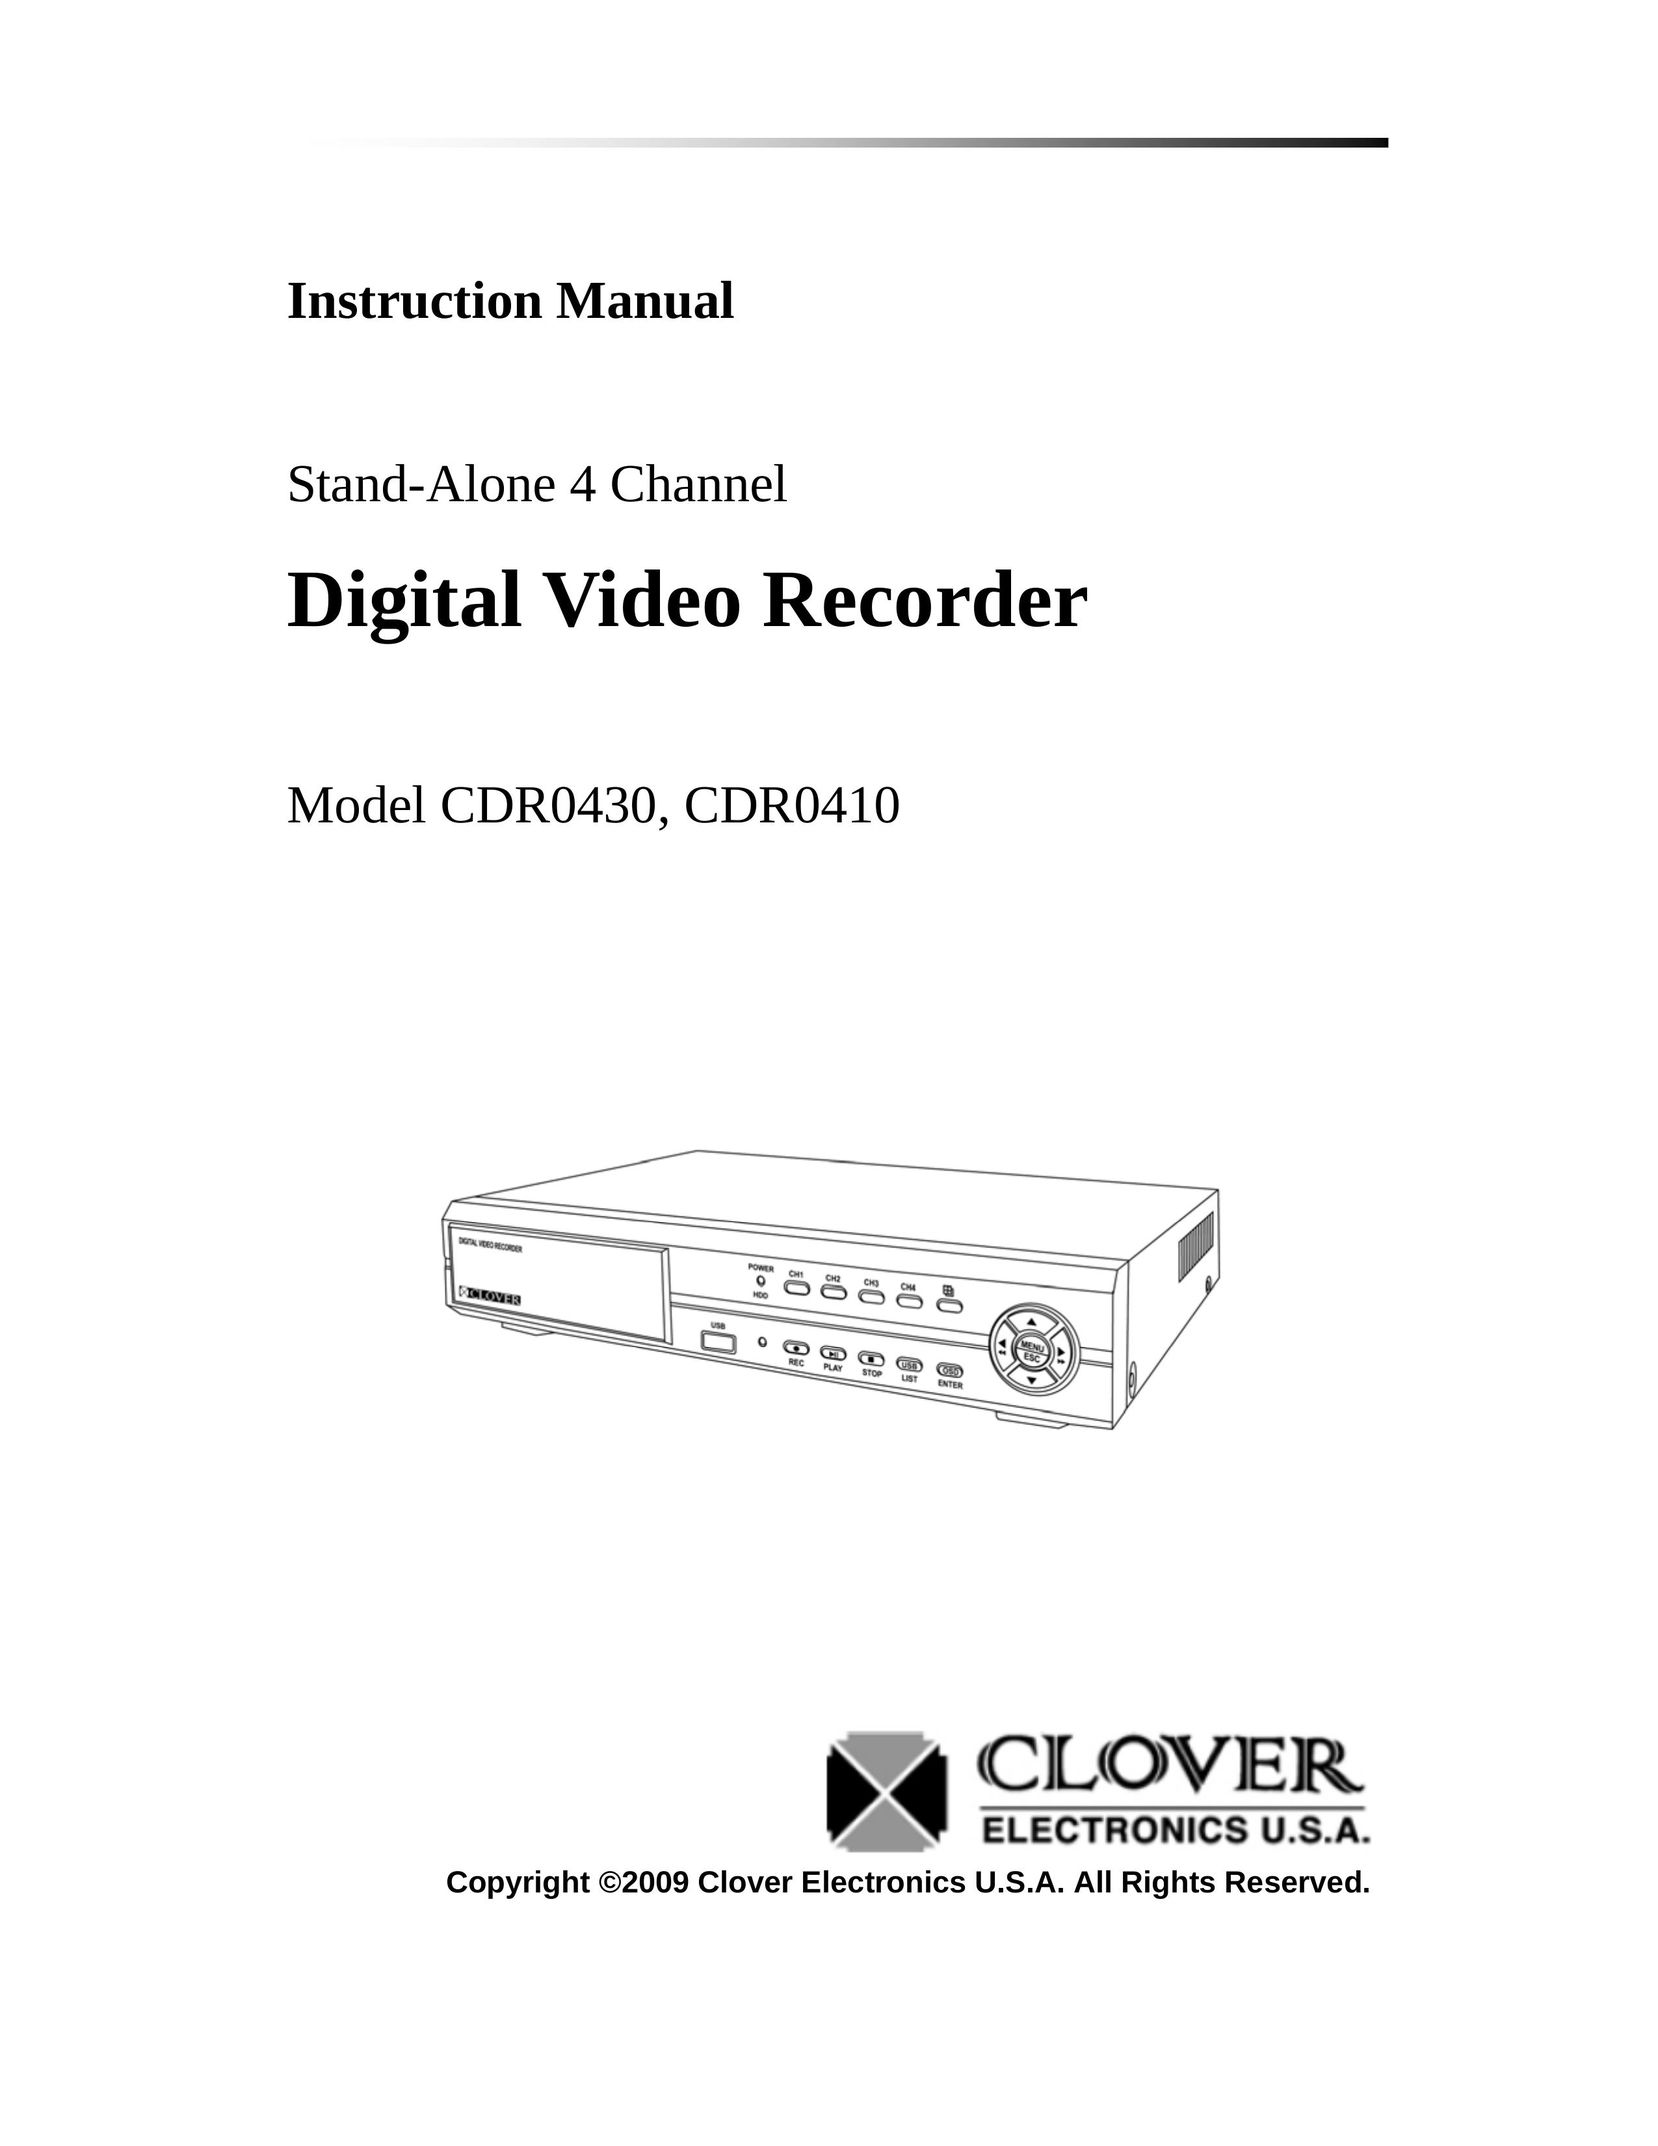 Clover Electronics CDR0430 DVR User Manual